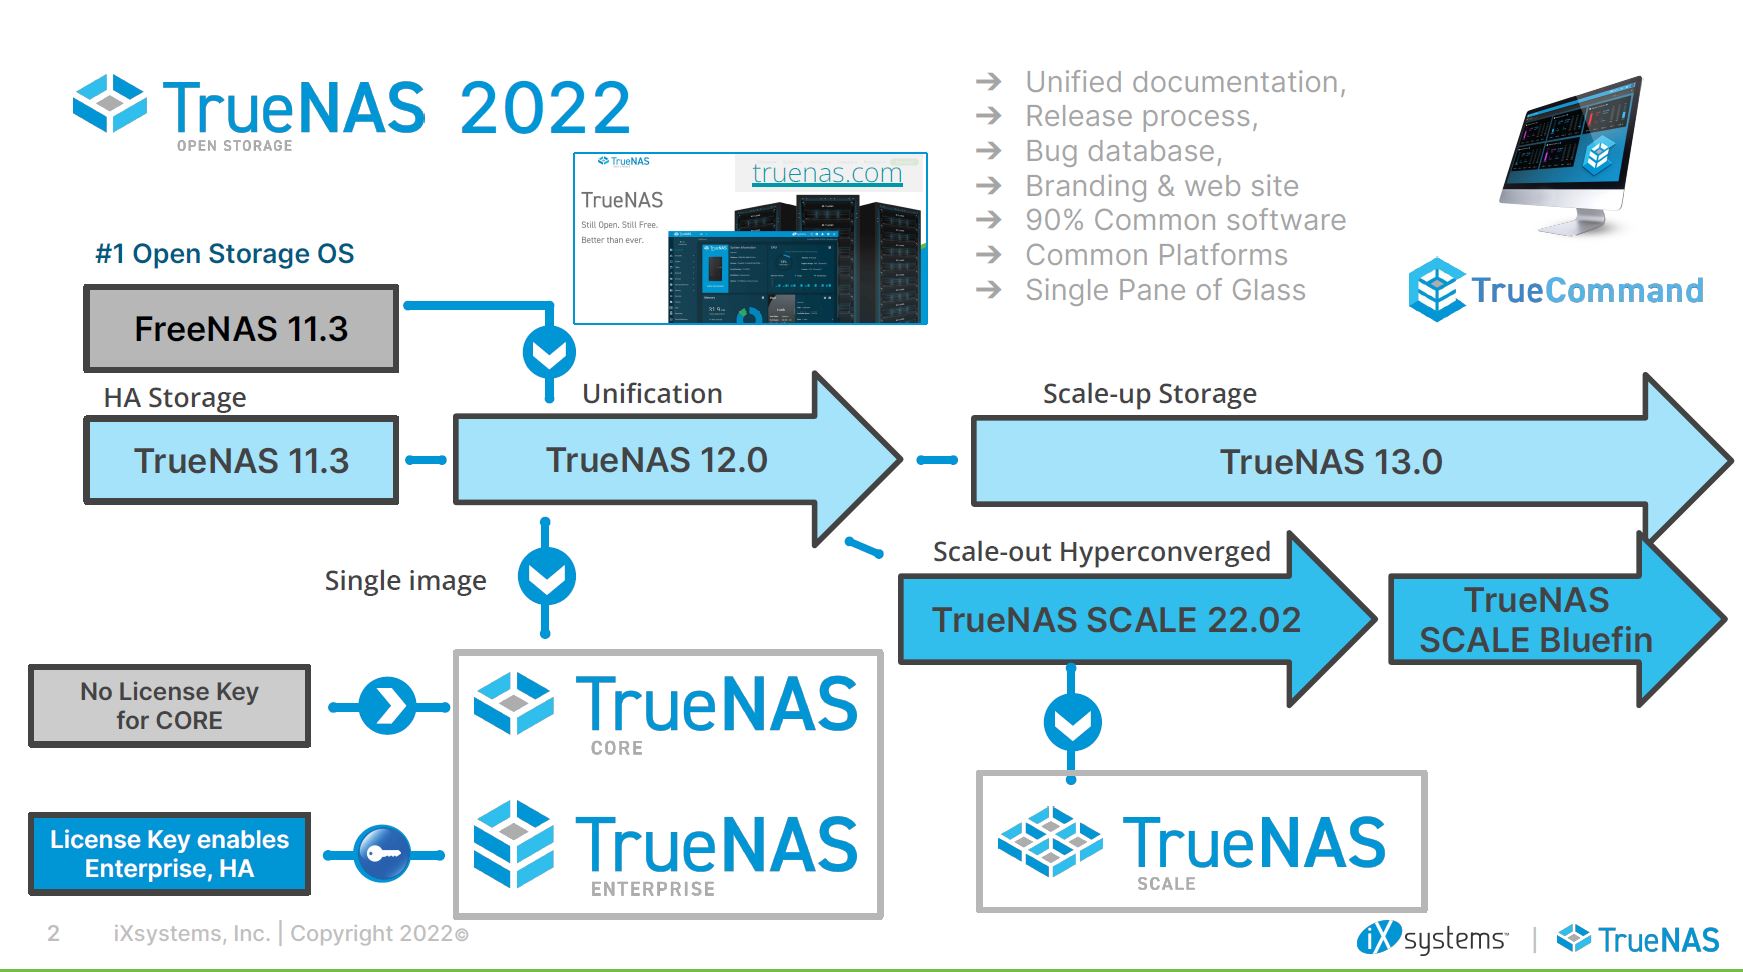 TrueNAS Scale 22.02 Release Dashboard